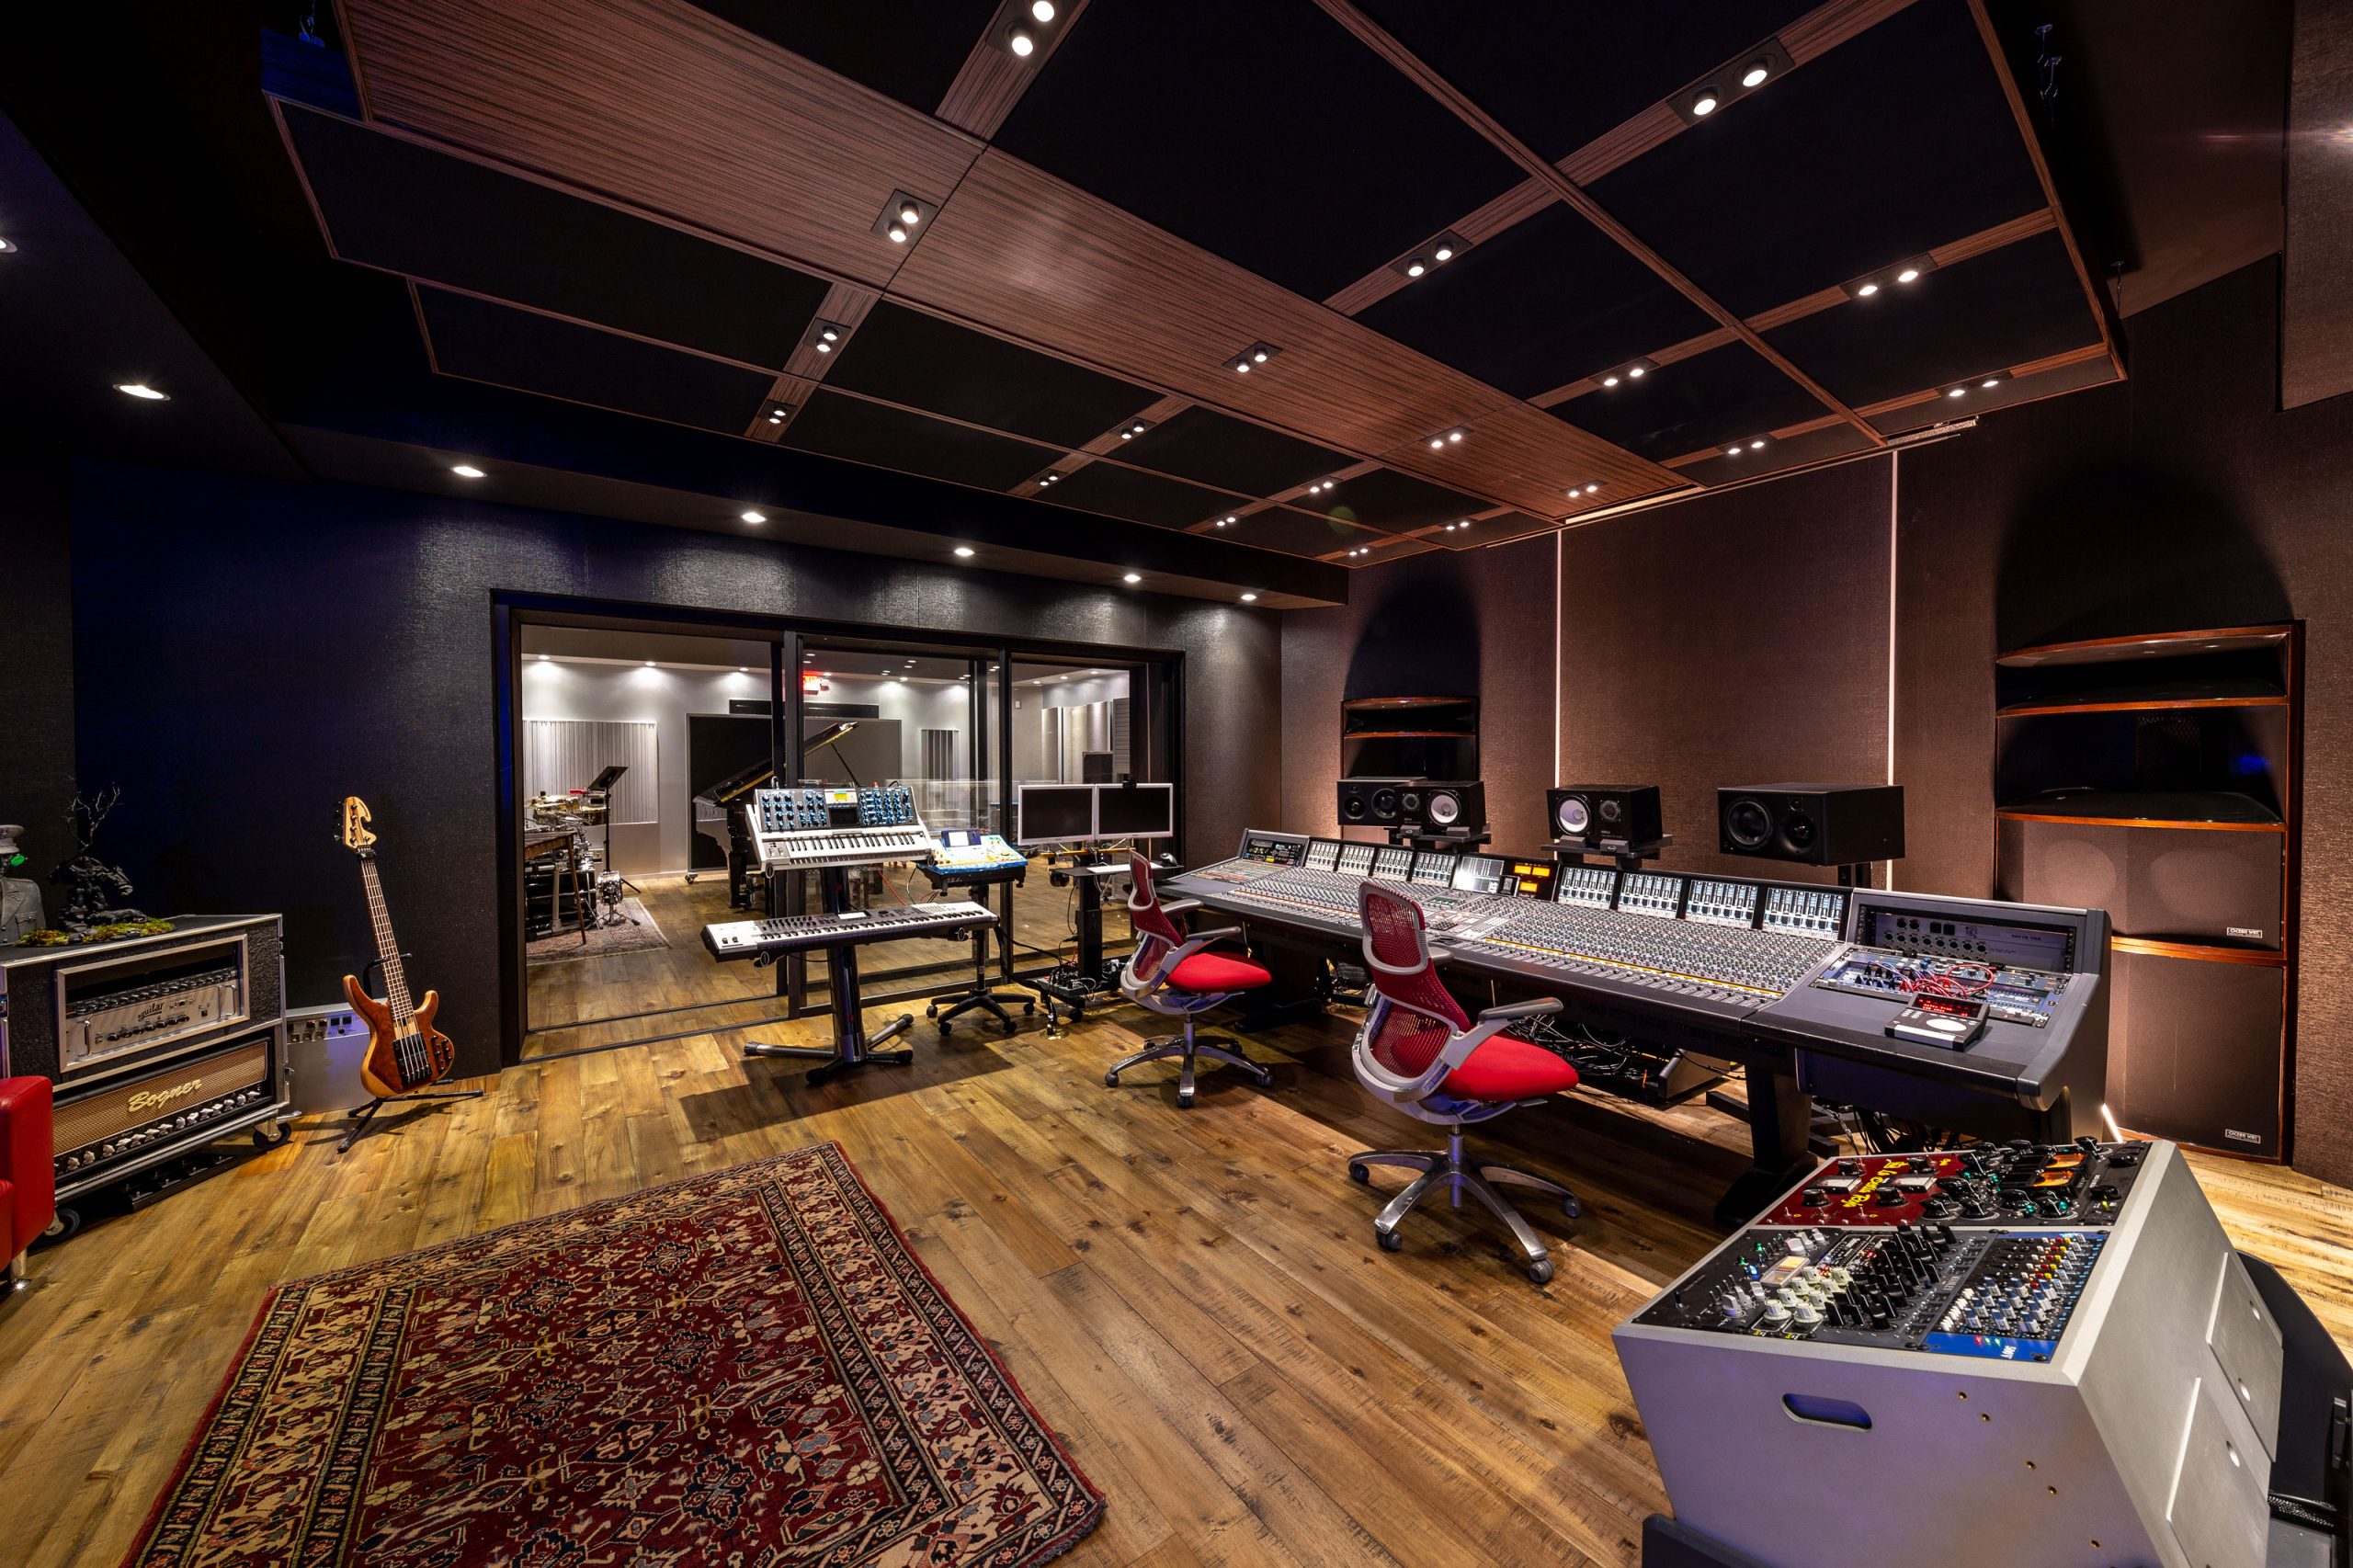 Noisematch Recording Studios Miami | Music Recording -Music Production - Mixing - Mastering